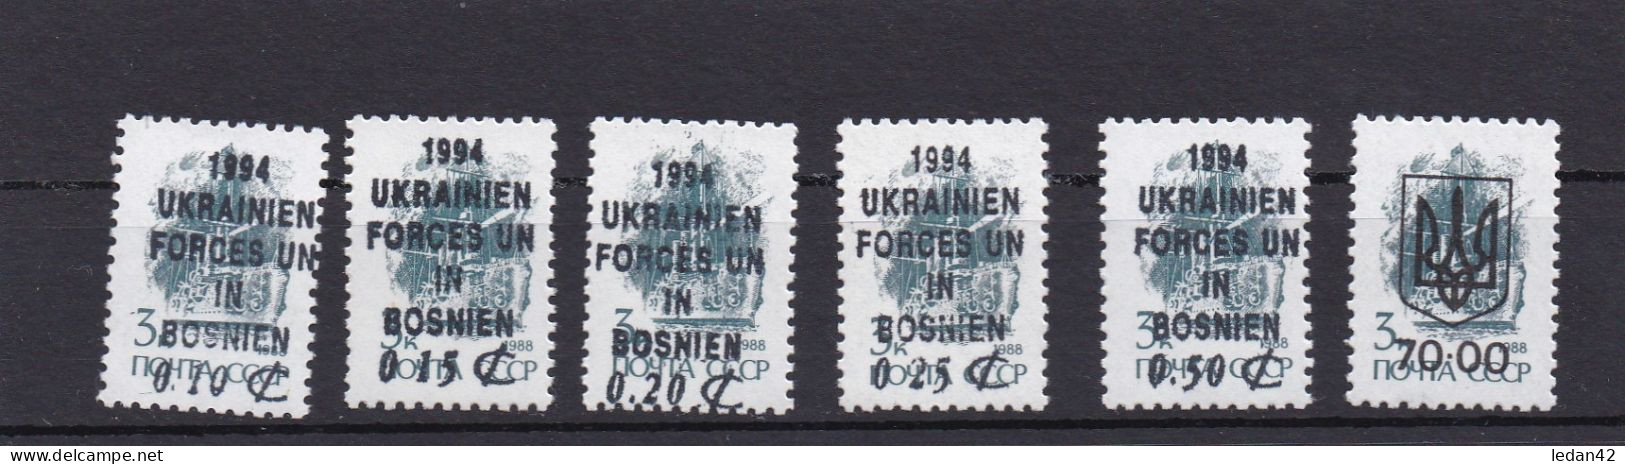 Ukraine 1994, Corps D'interposition U N En Bosnie ** - Ukraine